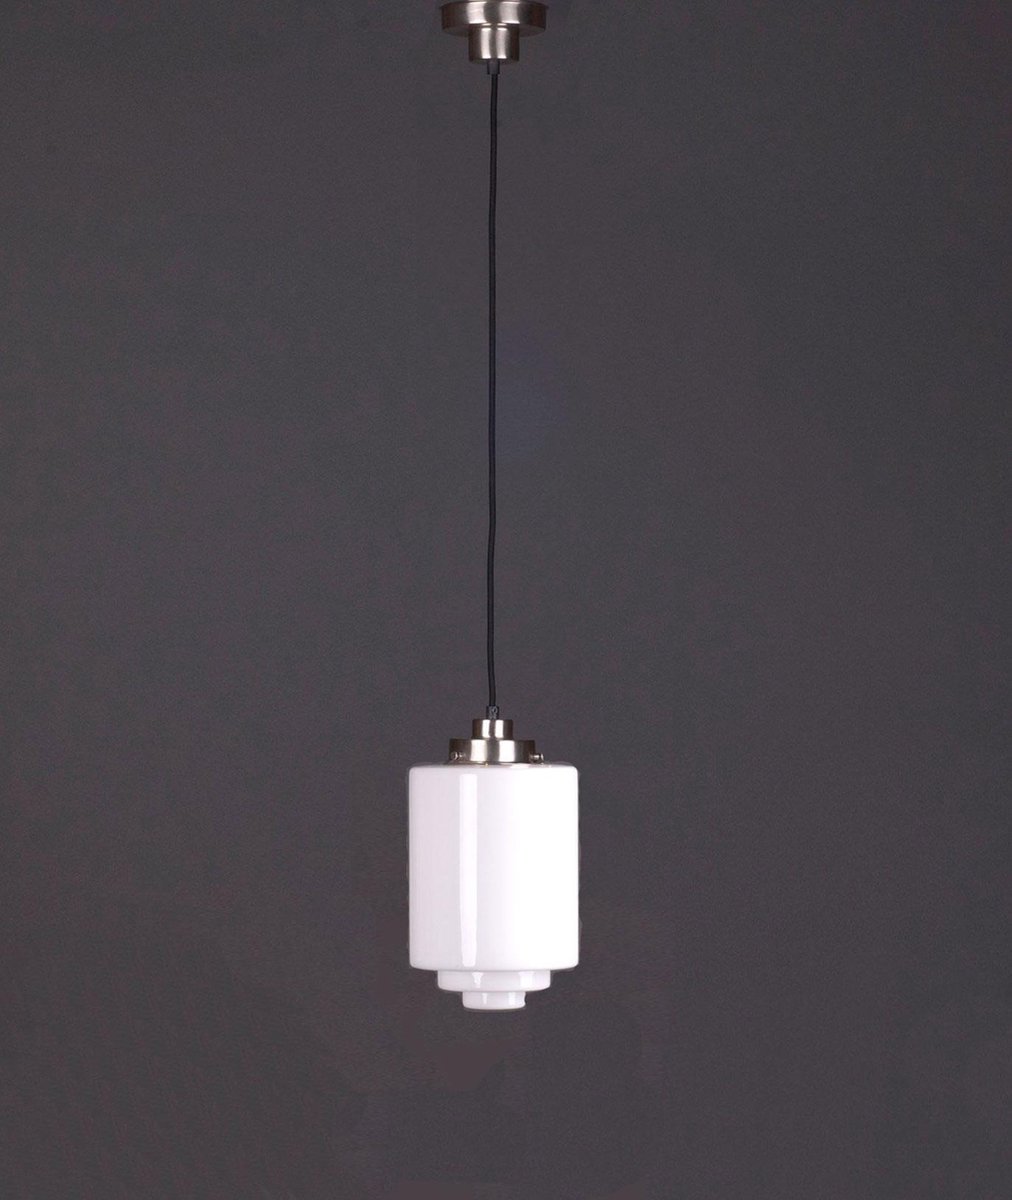 Art Deco Lamp - Hanglamp Getrapte Cilinder - Art Deco Trade